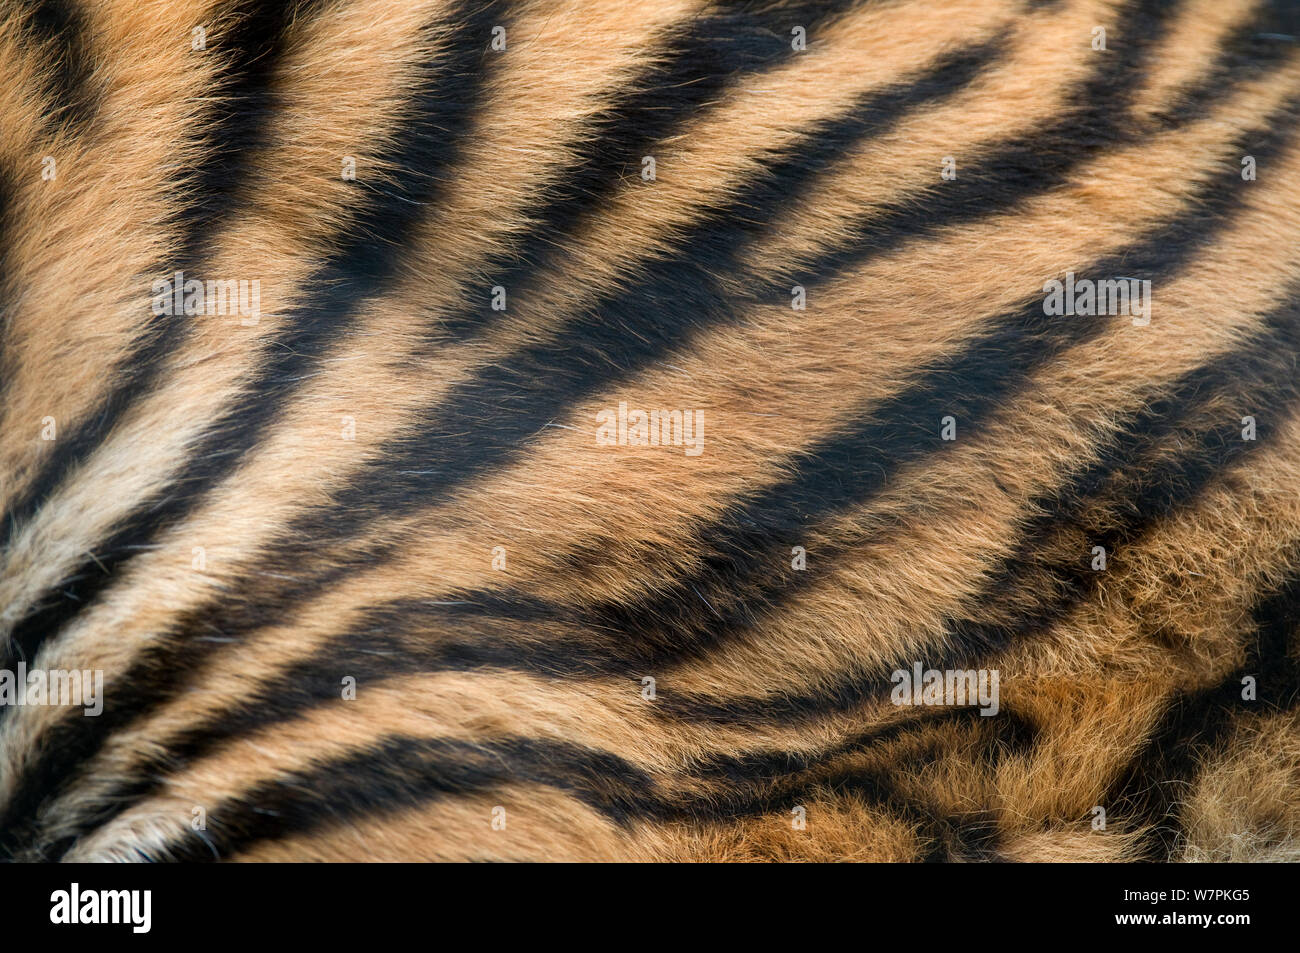 Tigre de Sumatra (Panthera tigris sumatrae) close up de peau, prisonnier Banque D'Images